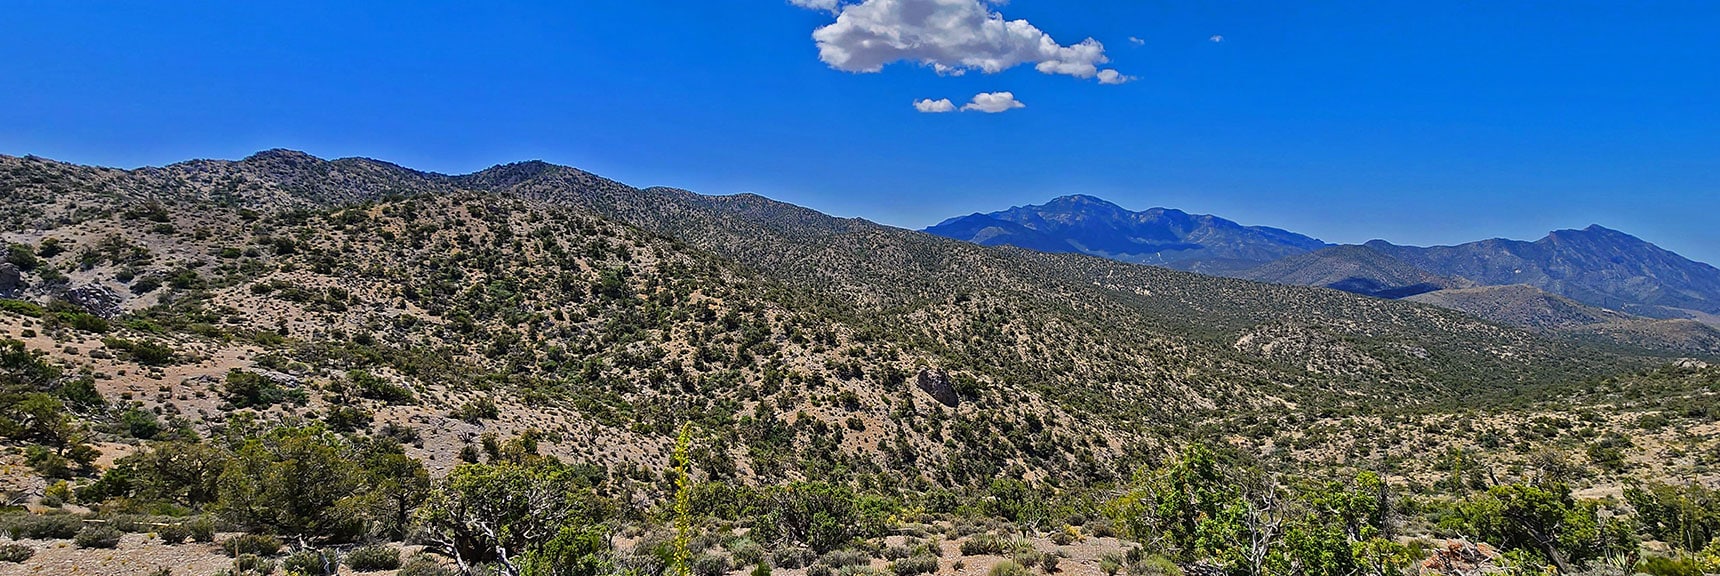 View of Southern Upper Crest Ridgeline to Potosi Mt. from Ridgeline Summit | Little Zion | Rainbow Mountain Wilderness, Nevada